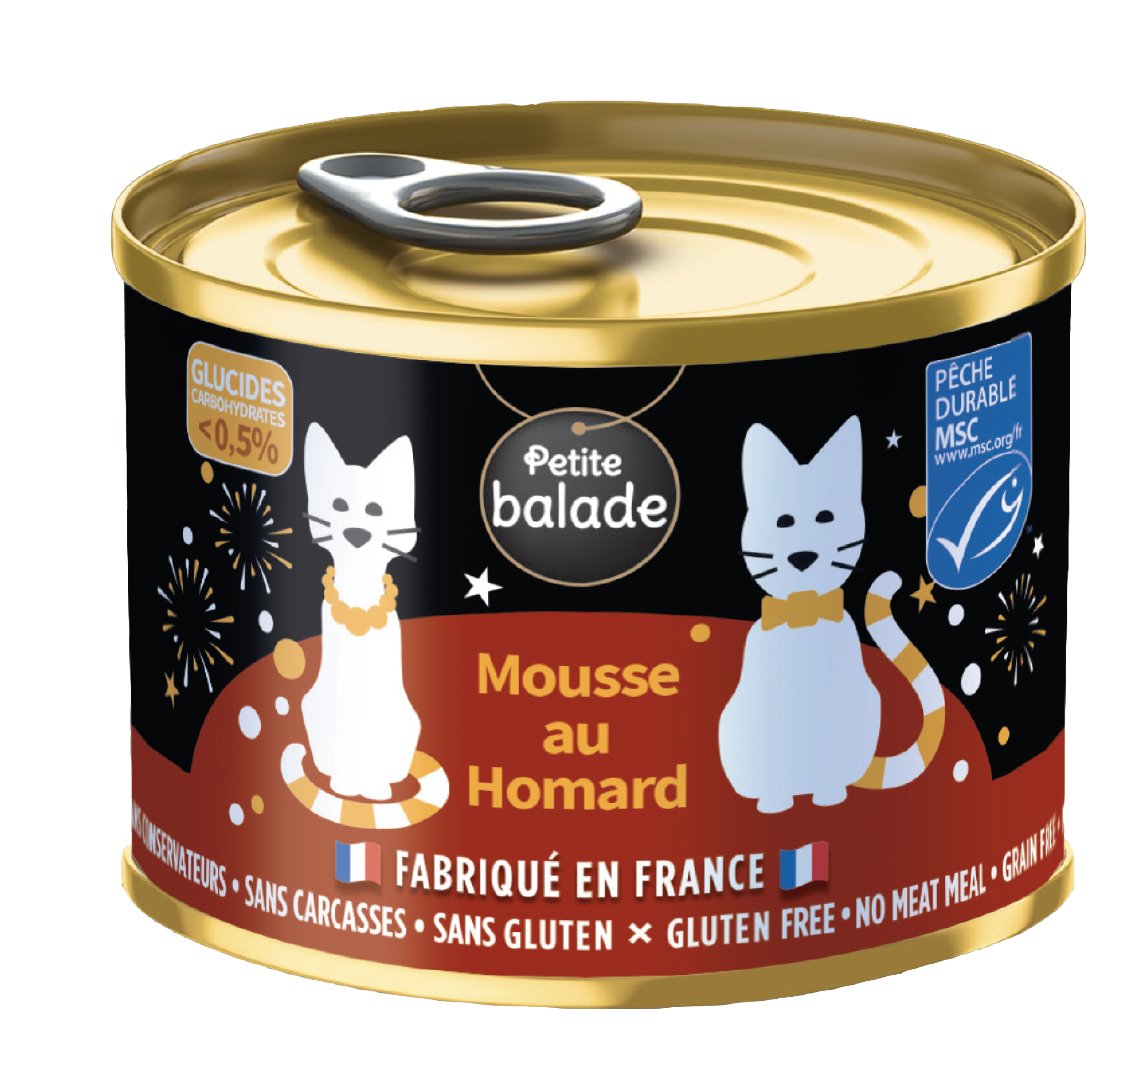 PETITE BALADE Mousse au Homard MSC - Alimento húmido mousse de lavagante para gato - 200g